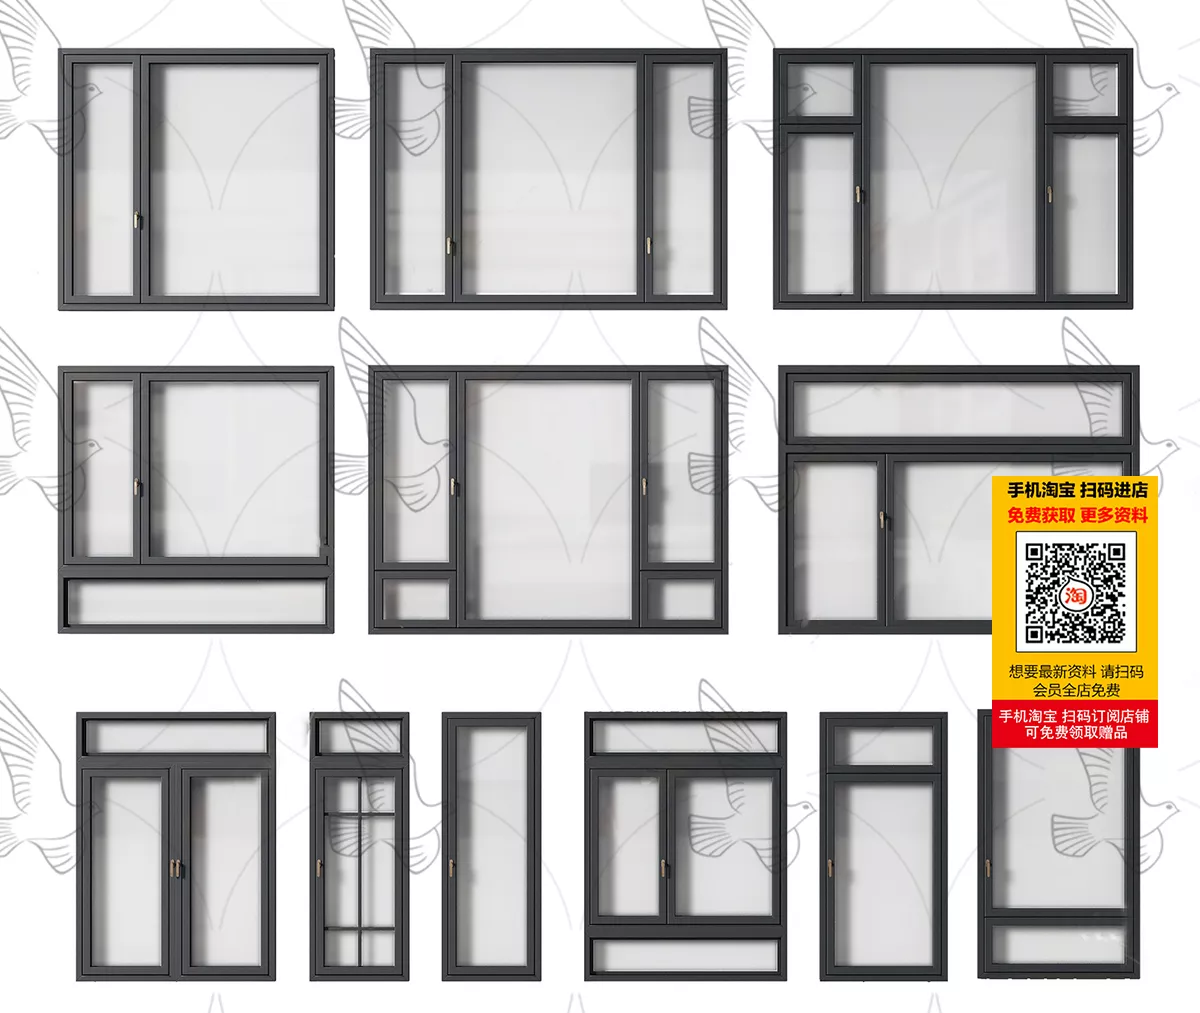 MODERN WINDOWS - SKETCHUP 3D MODEL - VRAY OR ENSCAPE - ID16694